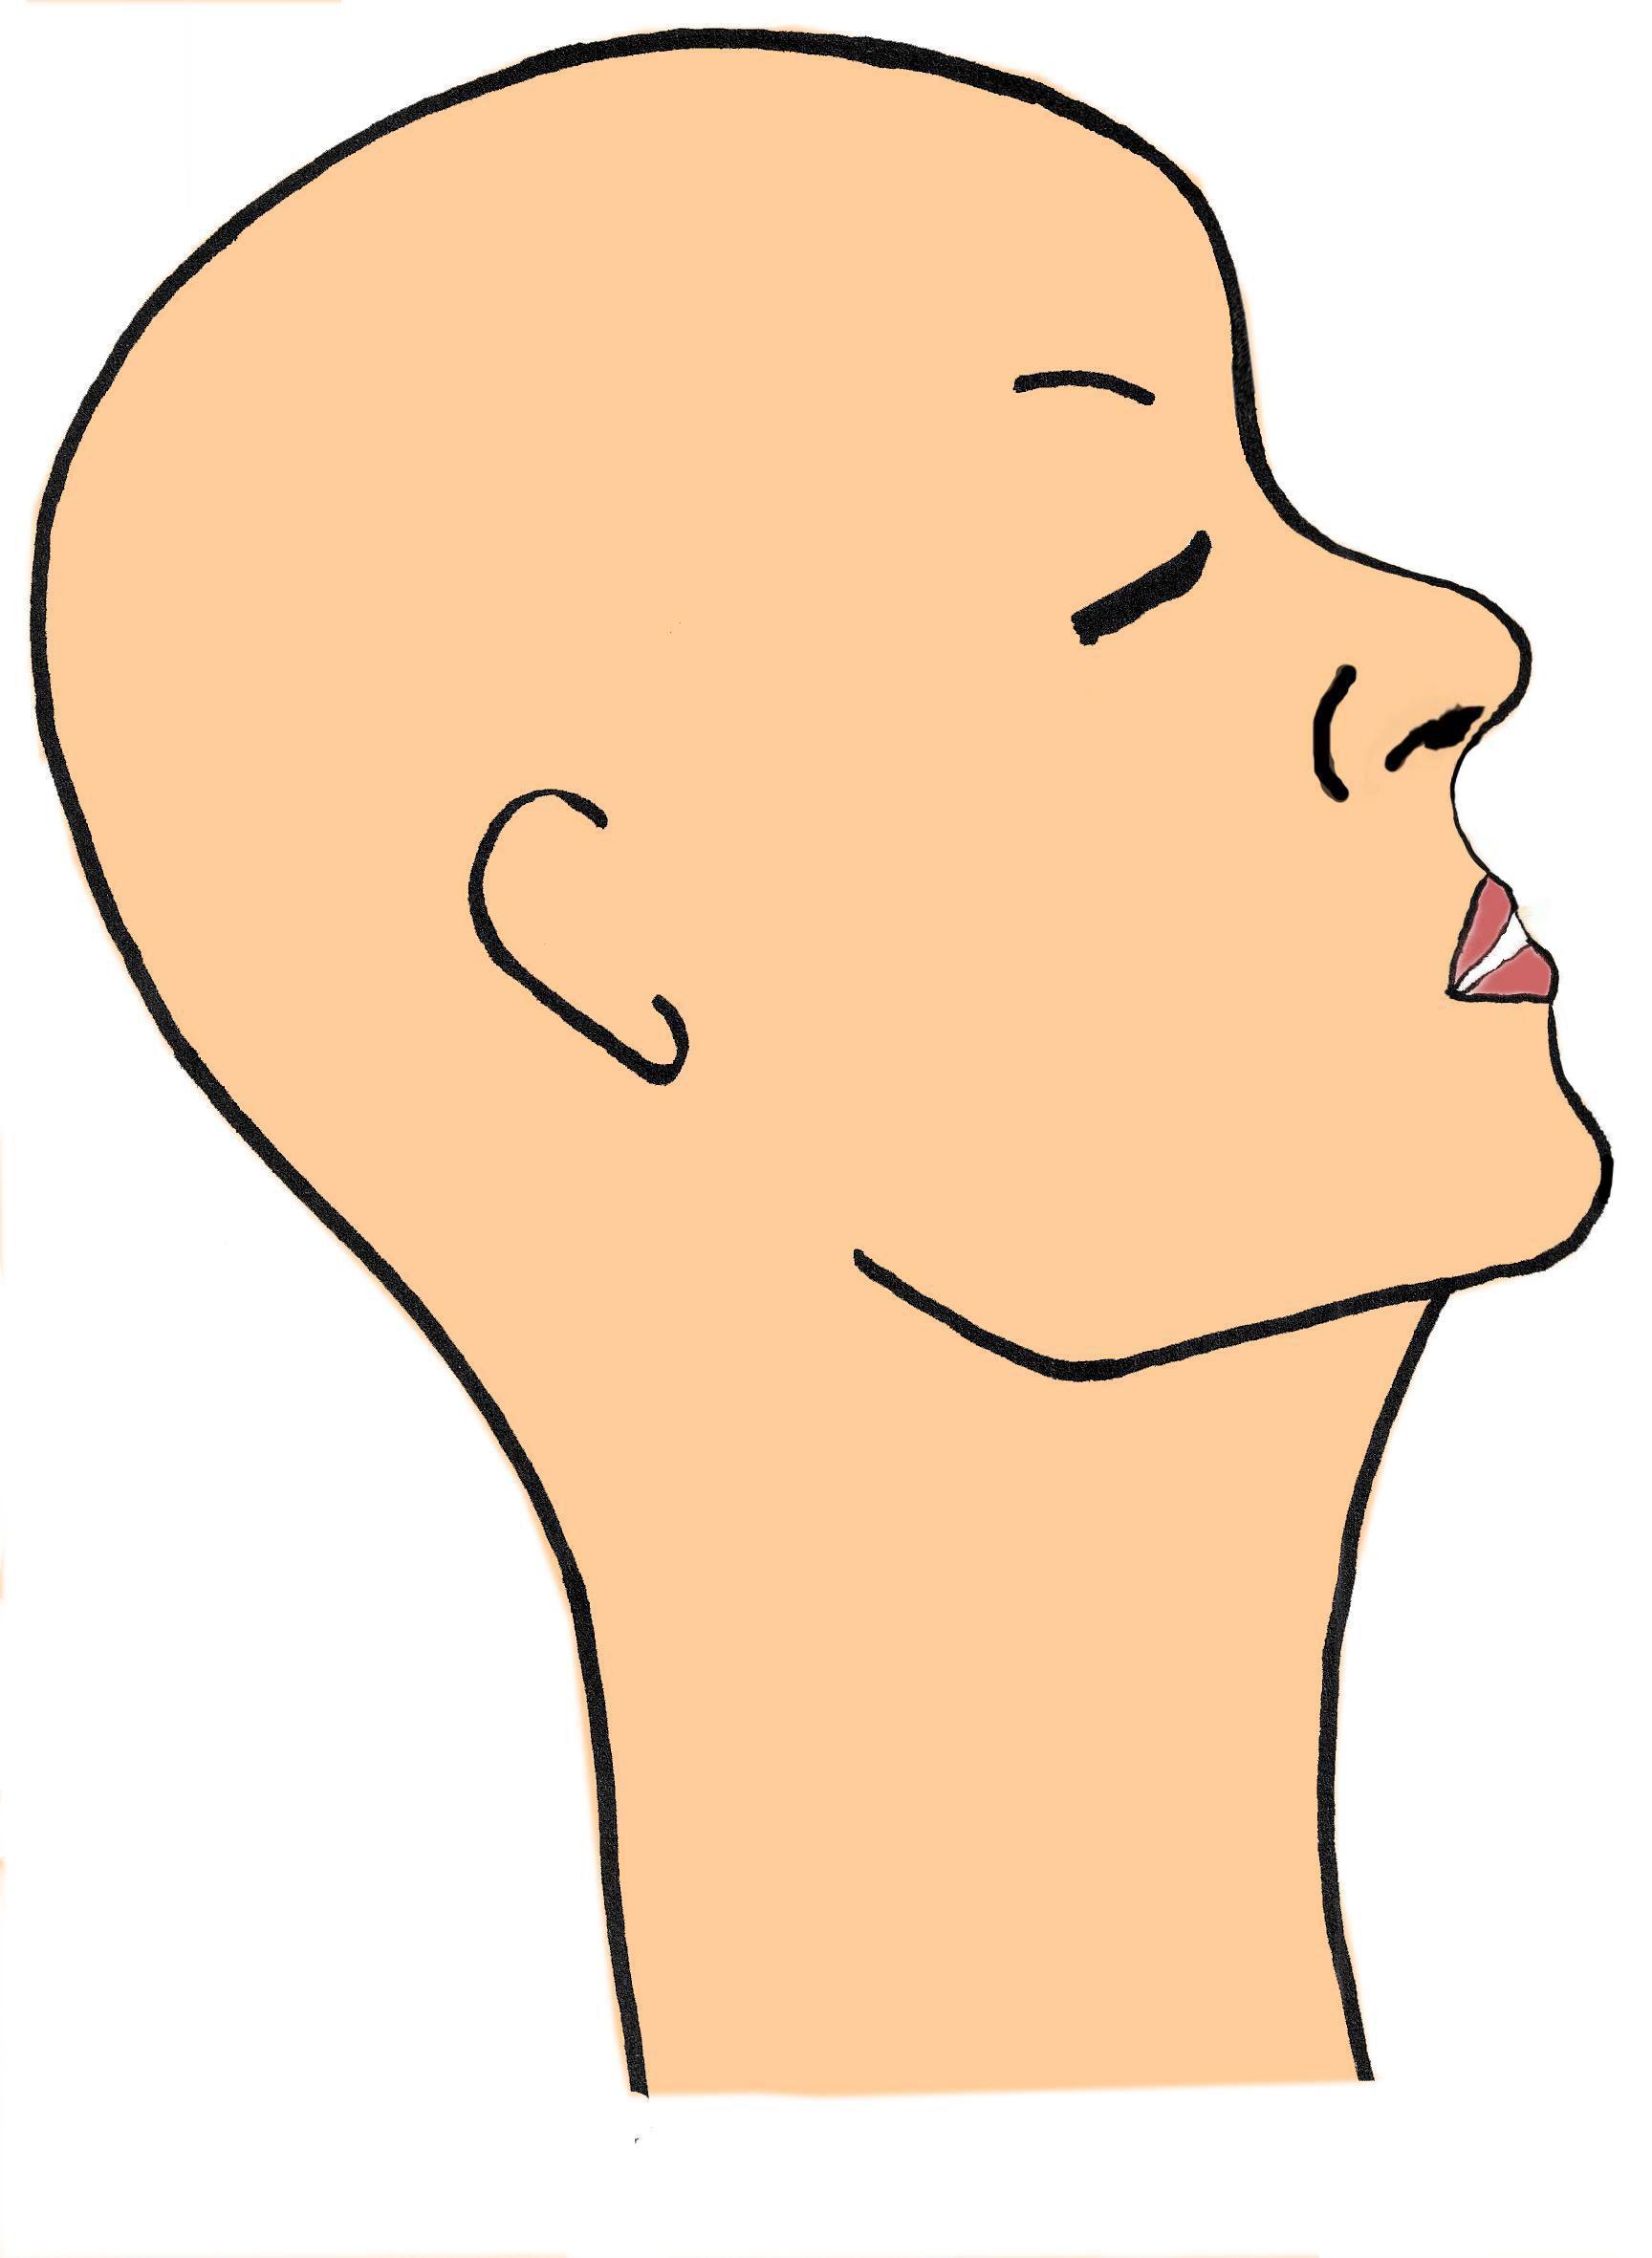 gros-nez-retrusion-maxillaire-mandibule-rhinoplastie-chirurgie-esthetique